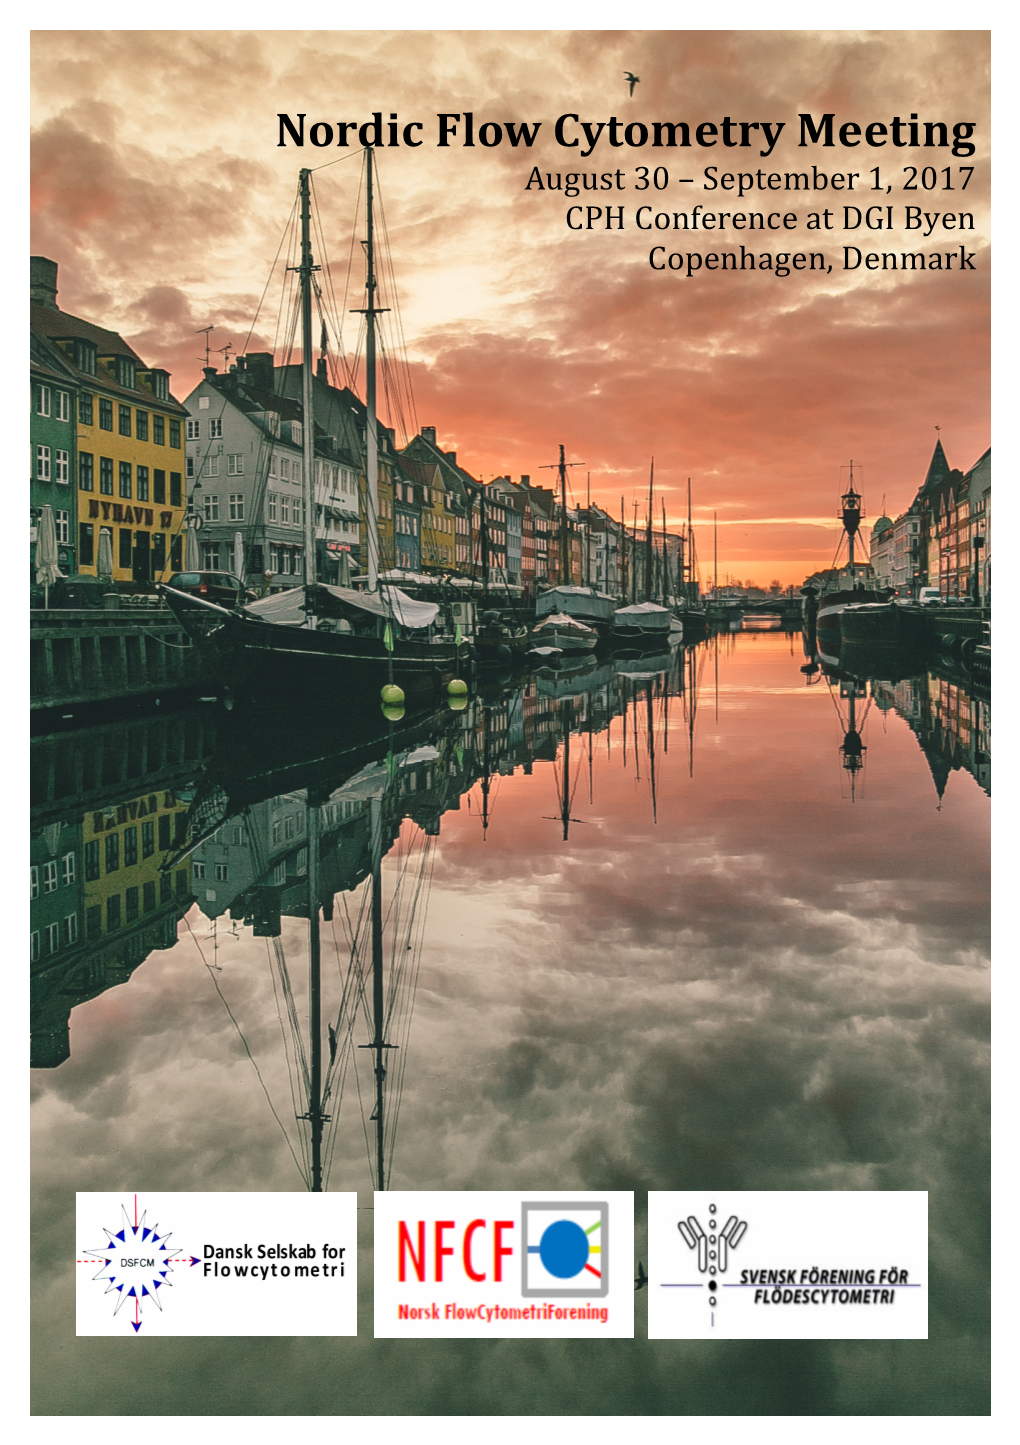 Nordic Flow Cytometry Meeting August 30 – September 1, 2017 CPH Conference at DGI Byen Copenhagen, Denmark